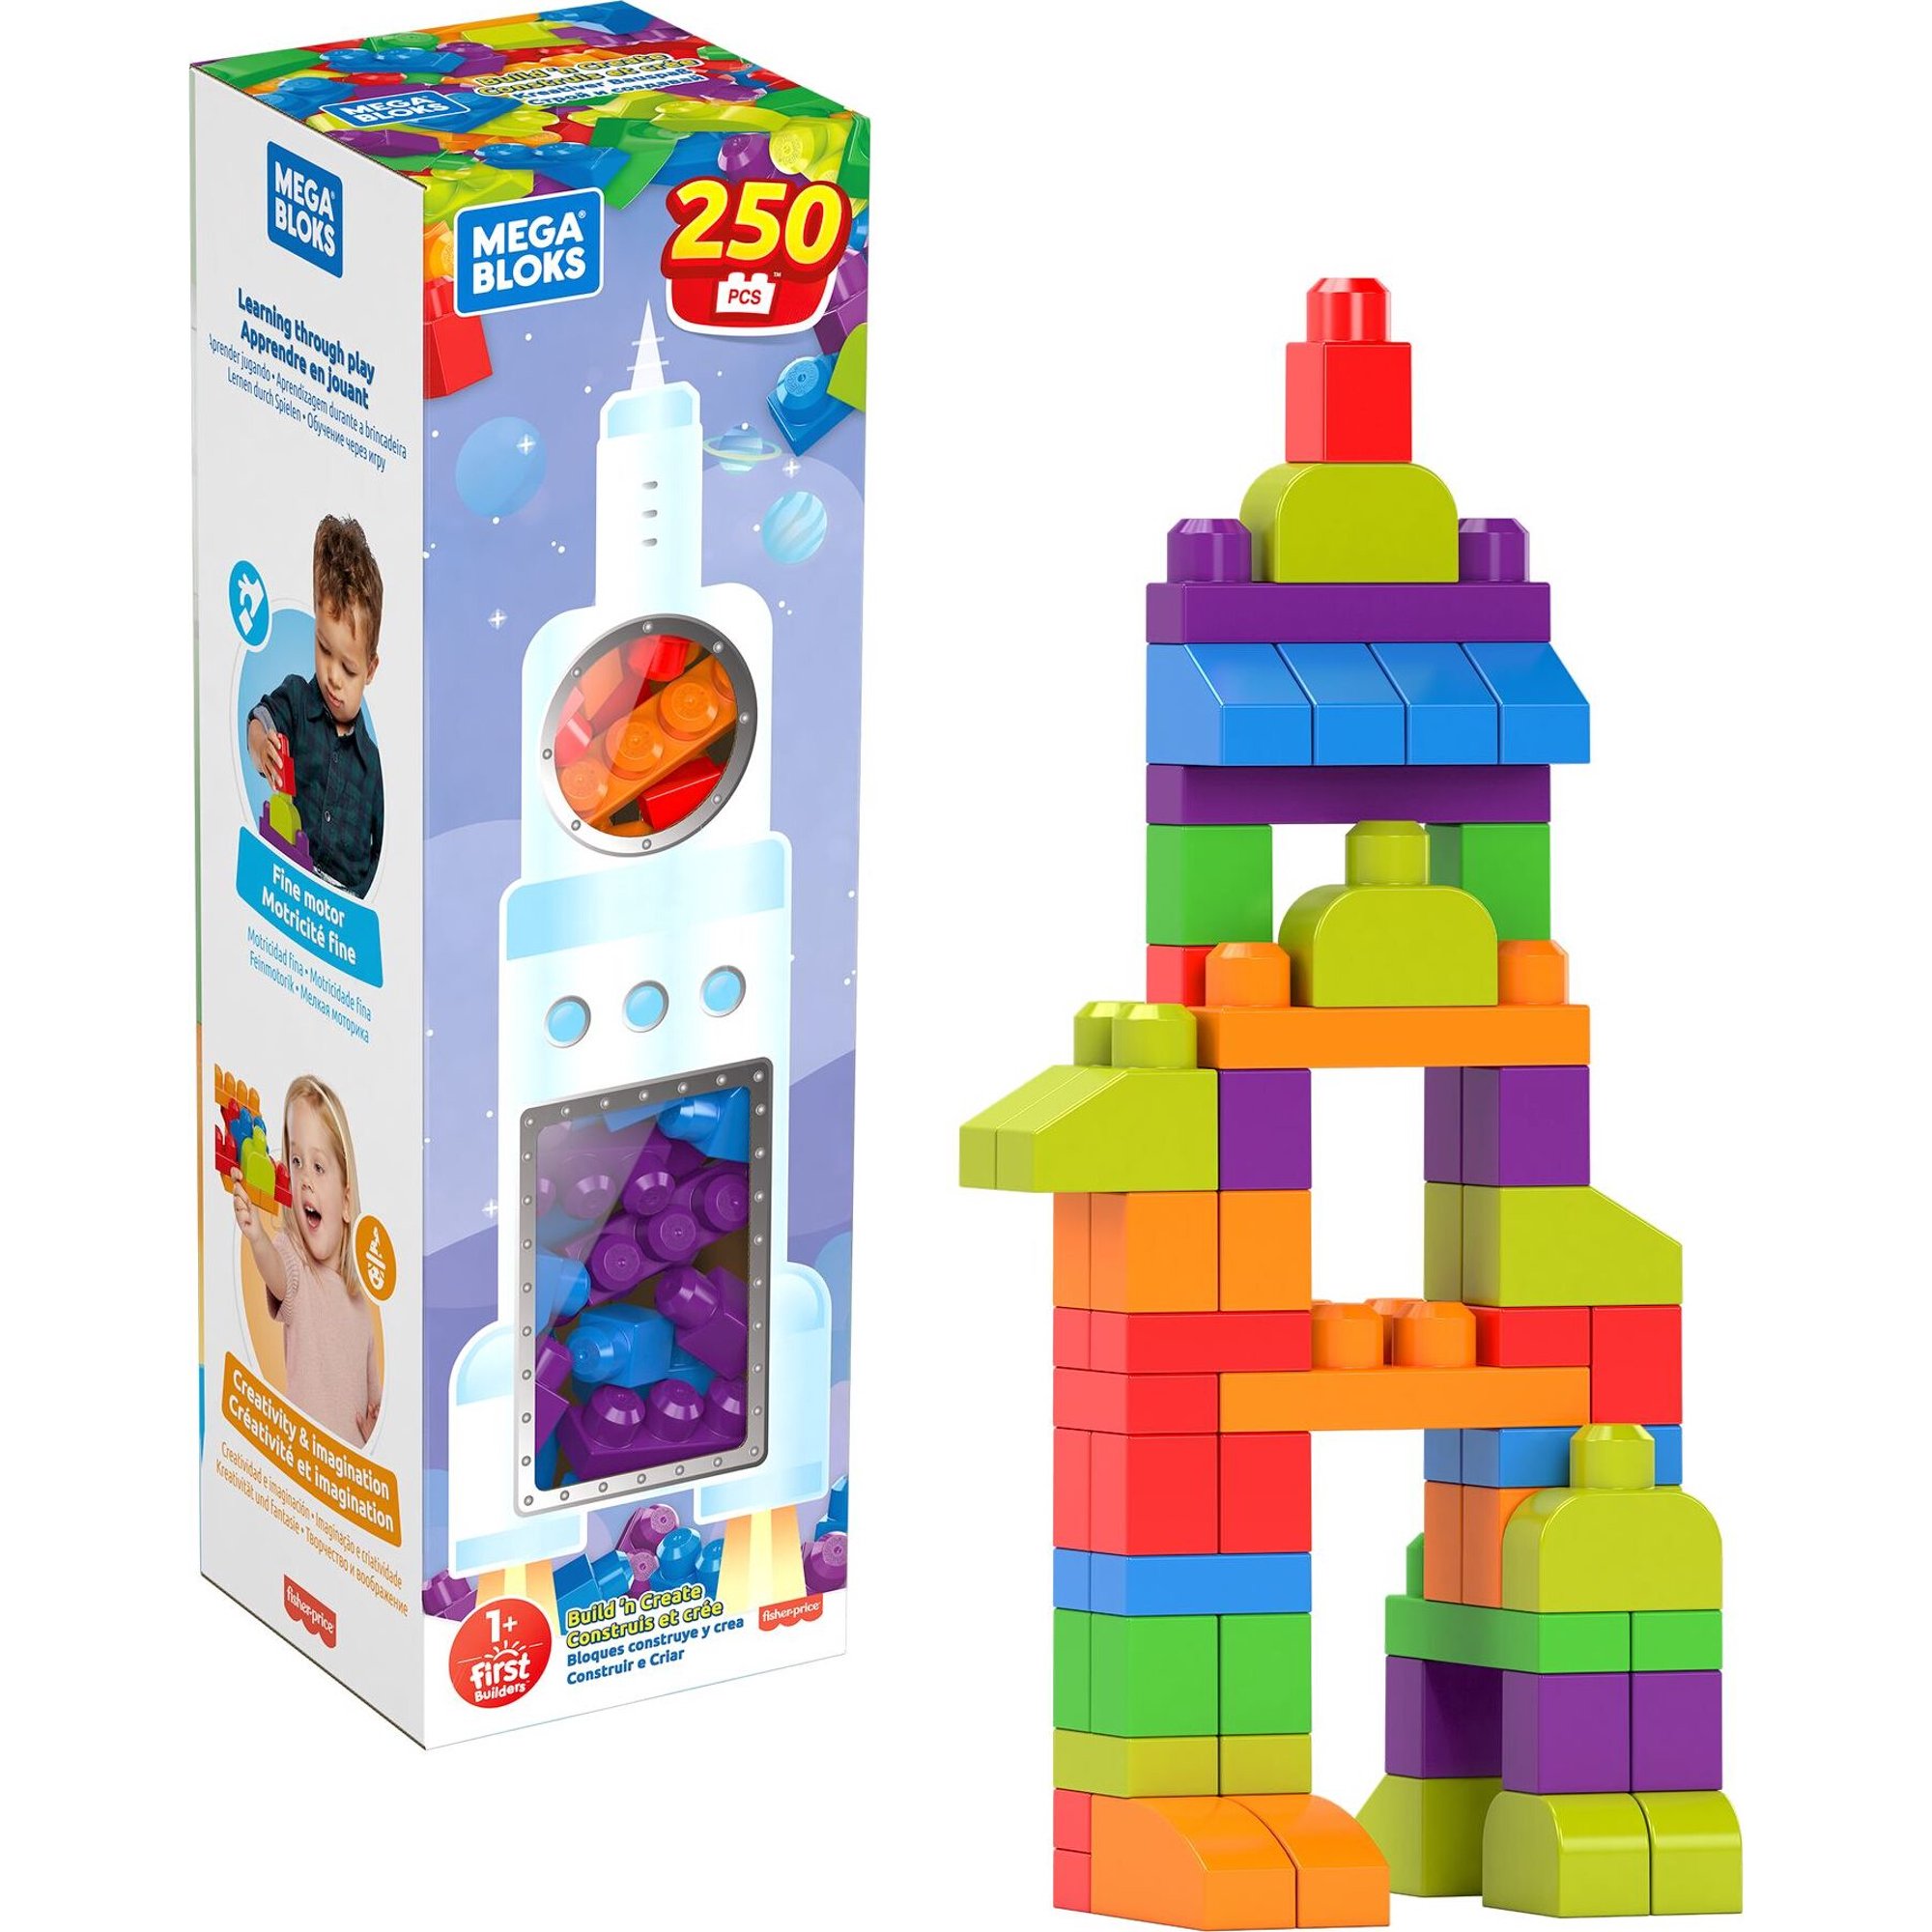 250-Piece Mega Bloks Build 'N Create Building Blocks Set $17.10 + Free Shipping w/ Walmart+ or $35+